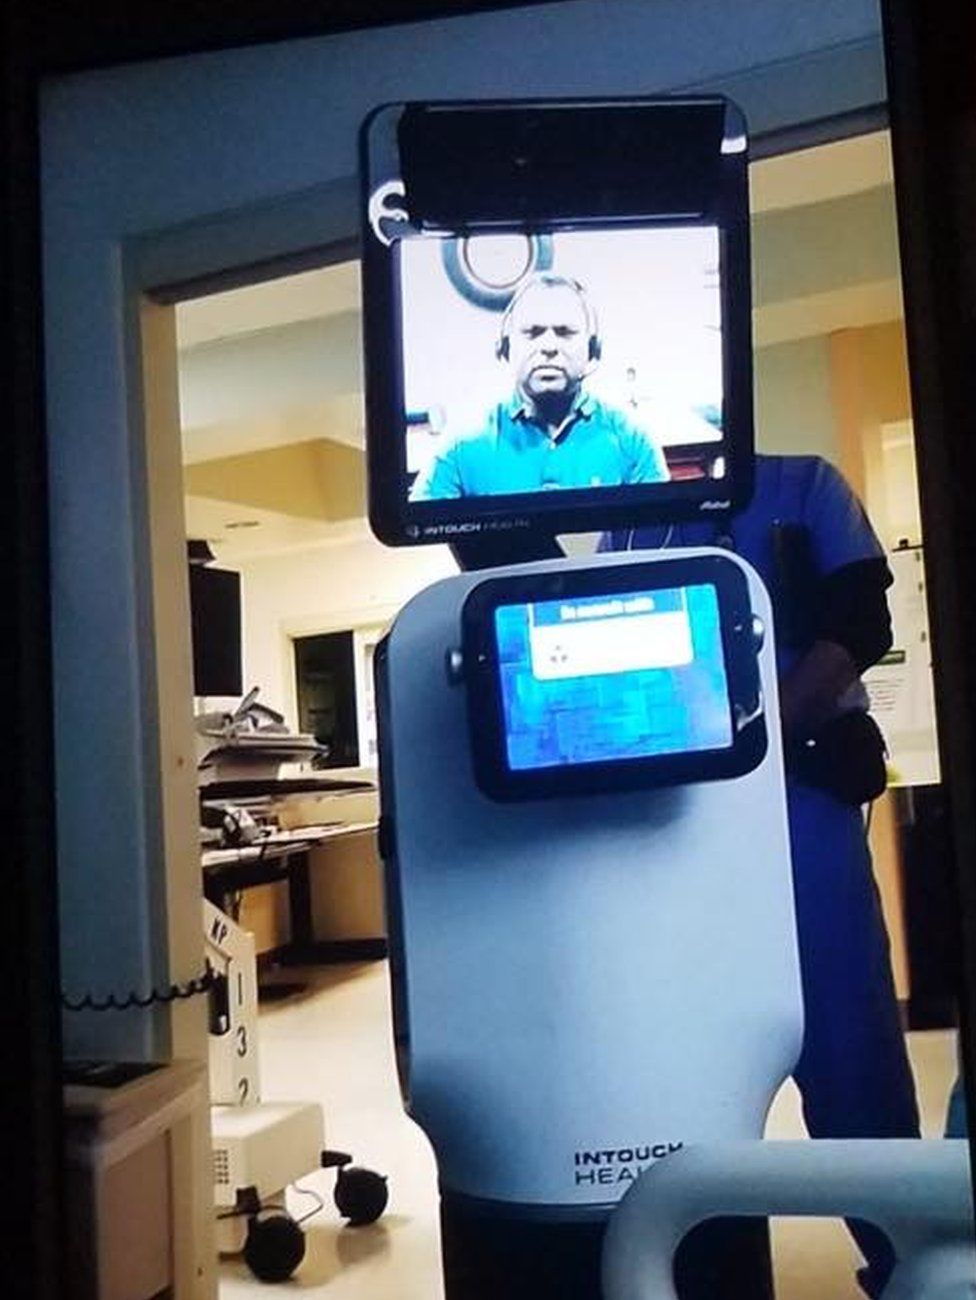 genvinde Vask vinduer filosofisk Man told he's going to die by doctor on video-link robot - BBC News